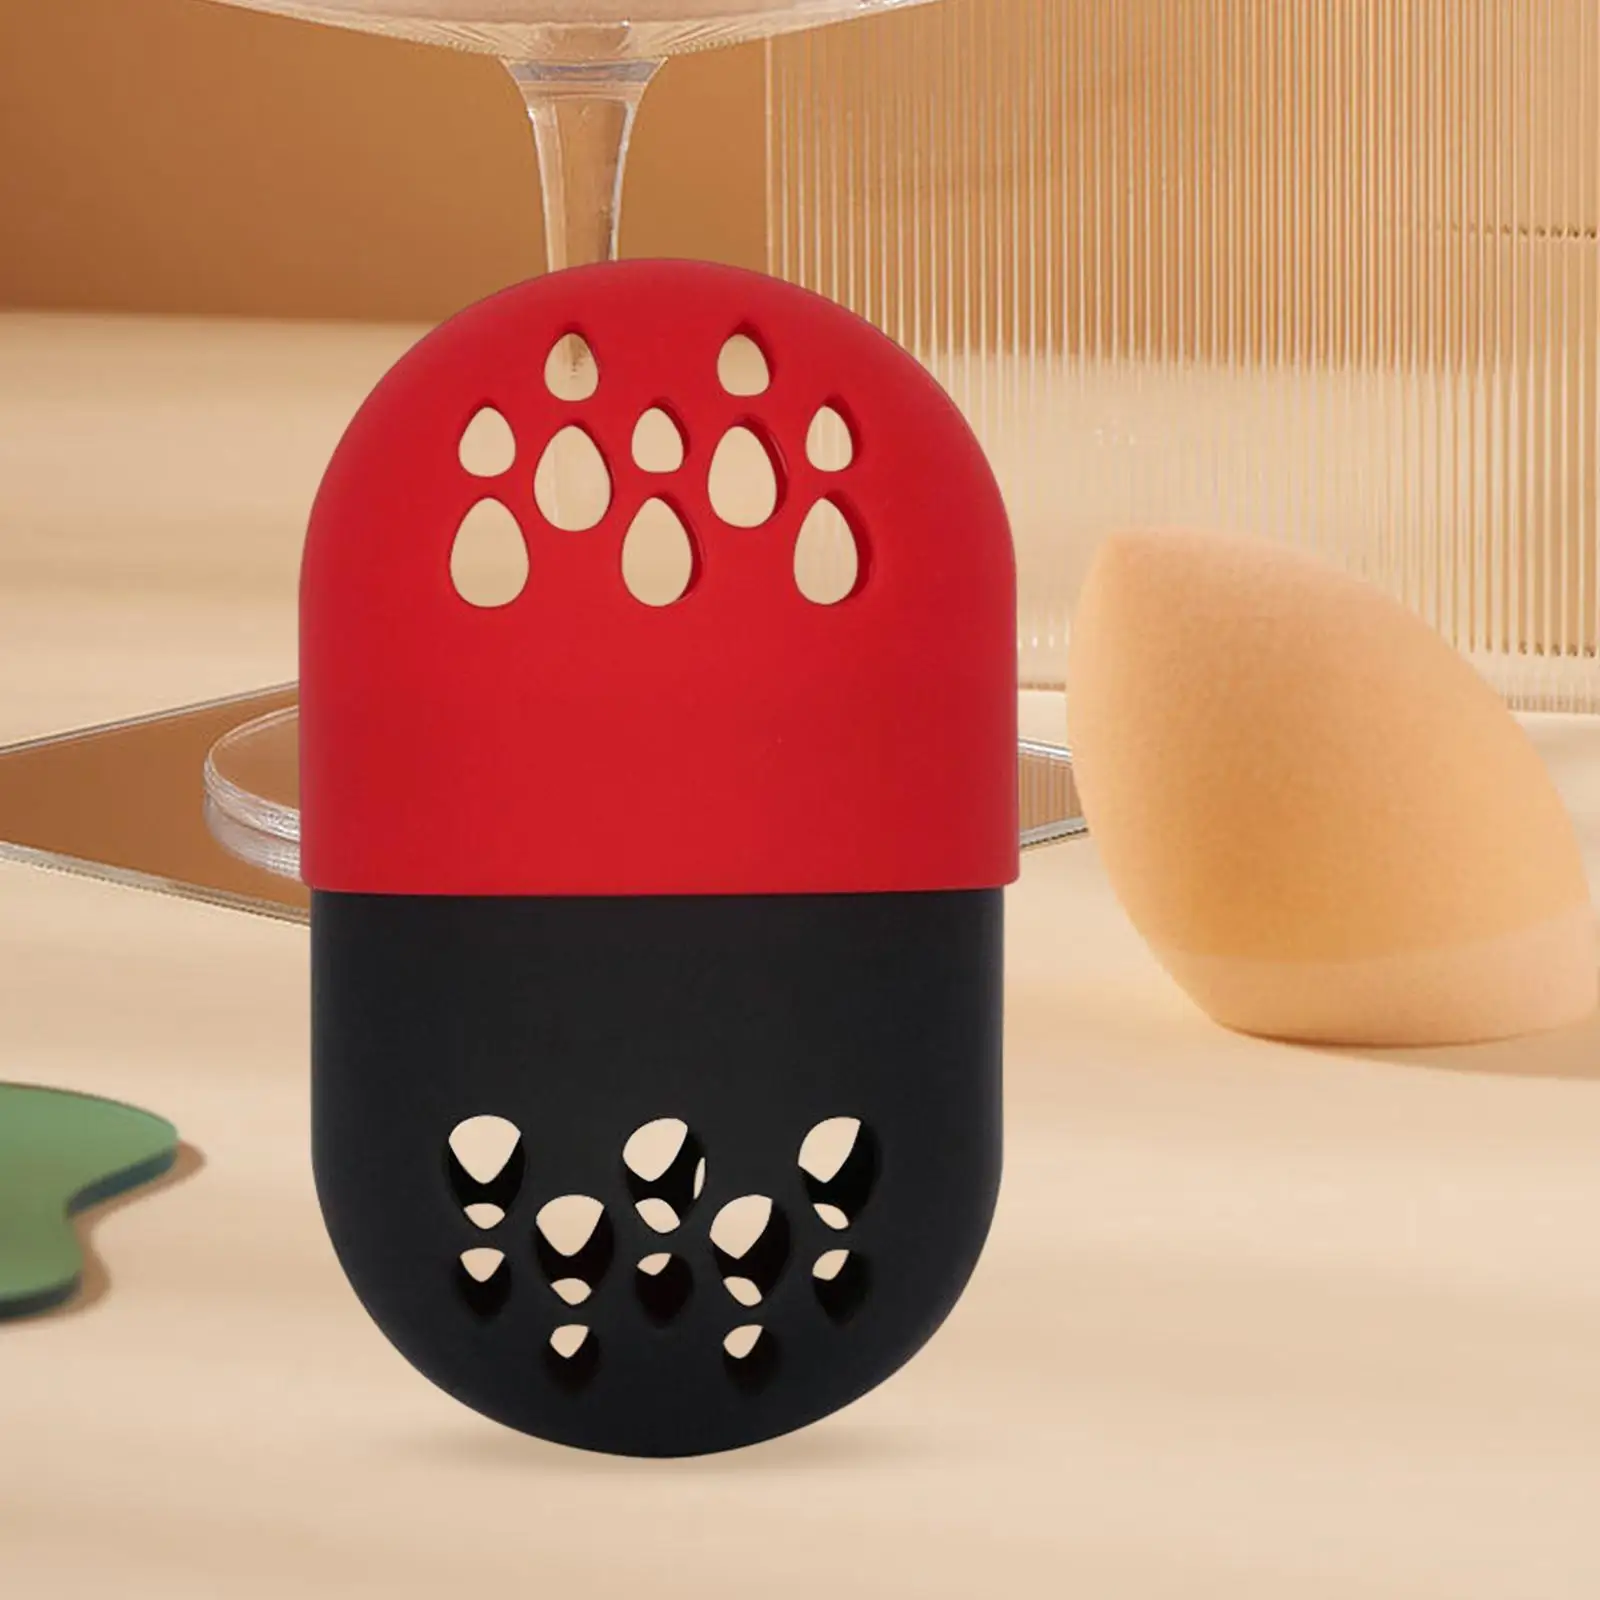 Portable Travel Makeup Sponge Holder Shatterproof Dustproof Silicone Make up Egg Storage Box Beauty Sponge Carrying Case